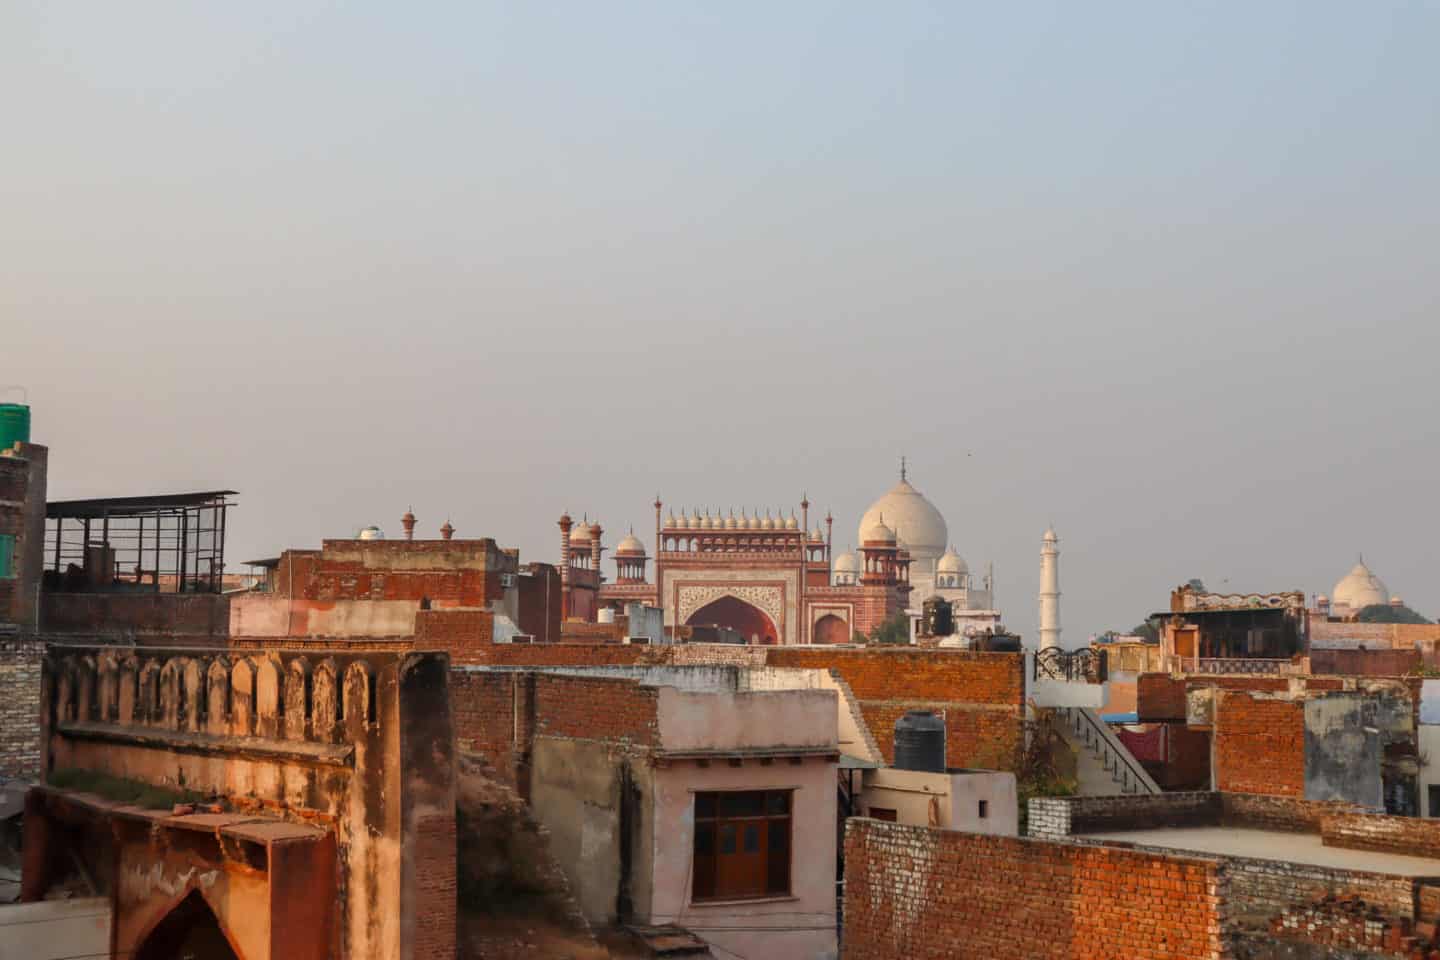 Taj Ganj Restaurant Rooftop View of Taj Mahal